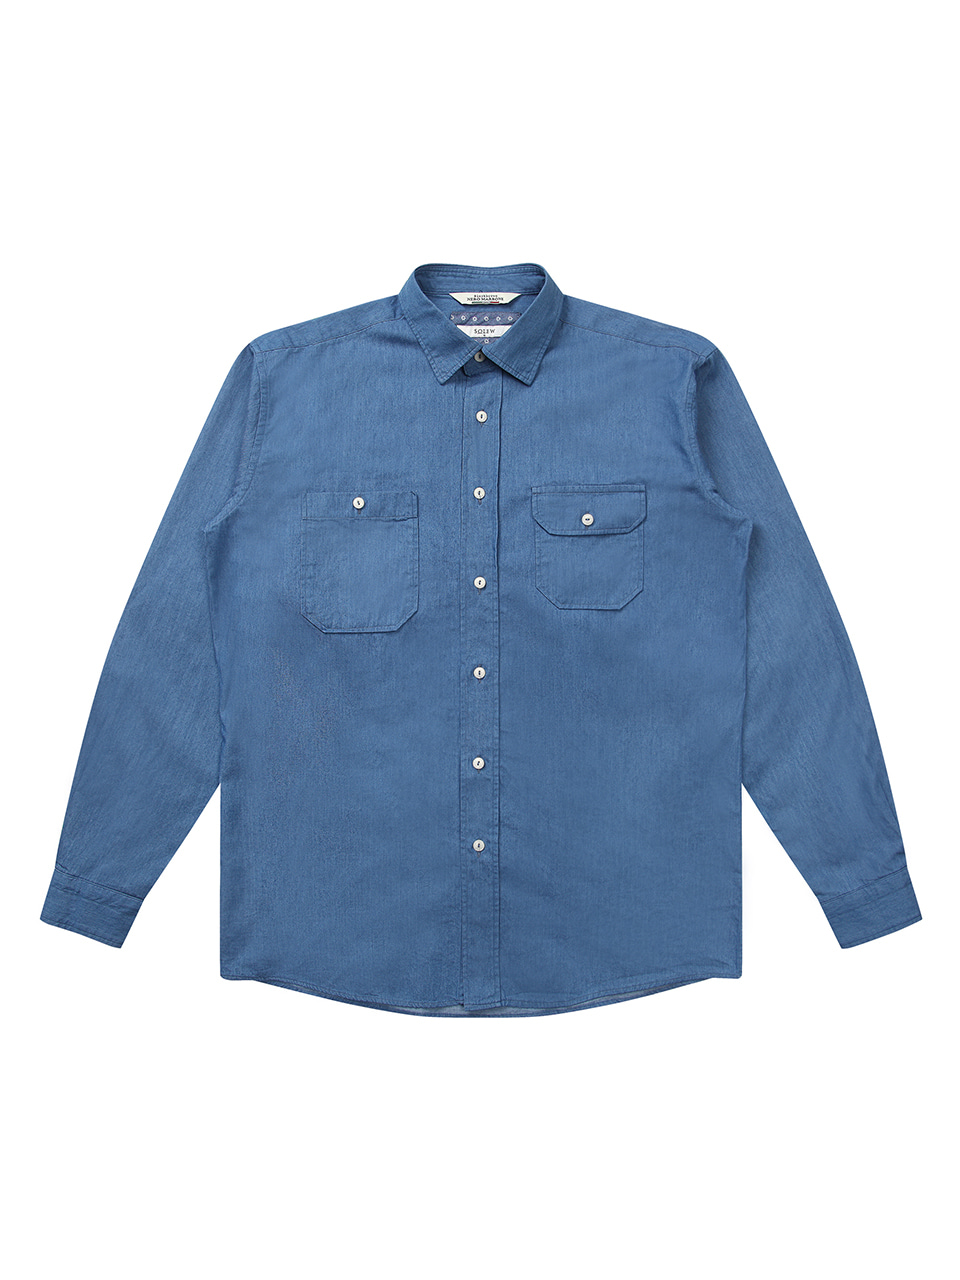 Washing Pocket Shirt Blue 02BL블랙브라운